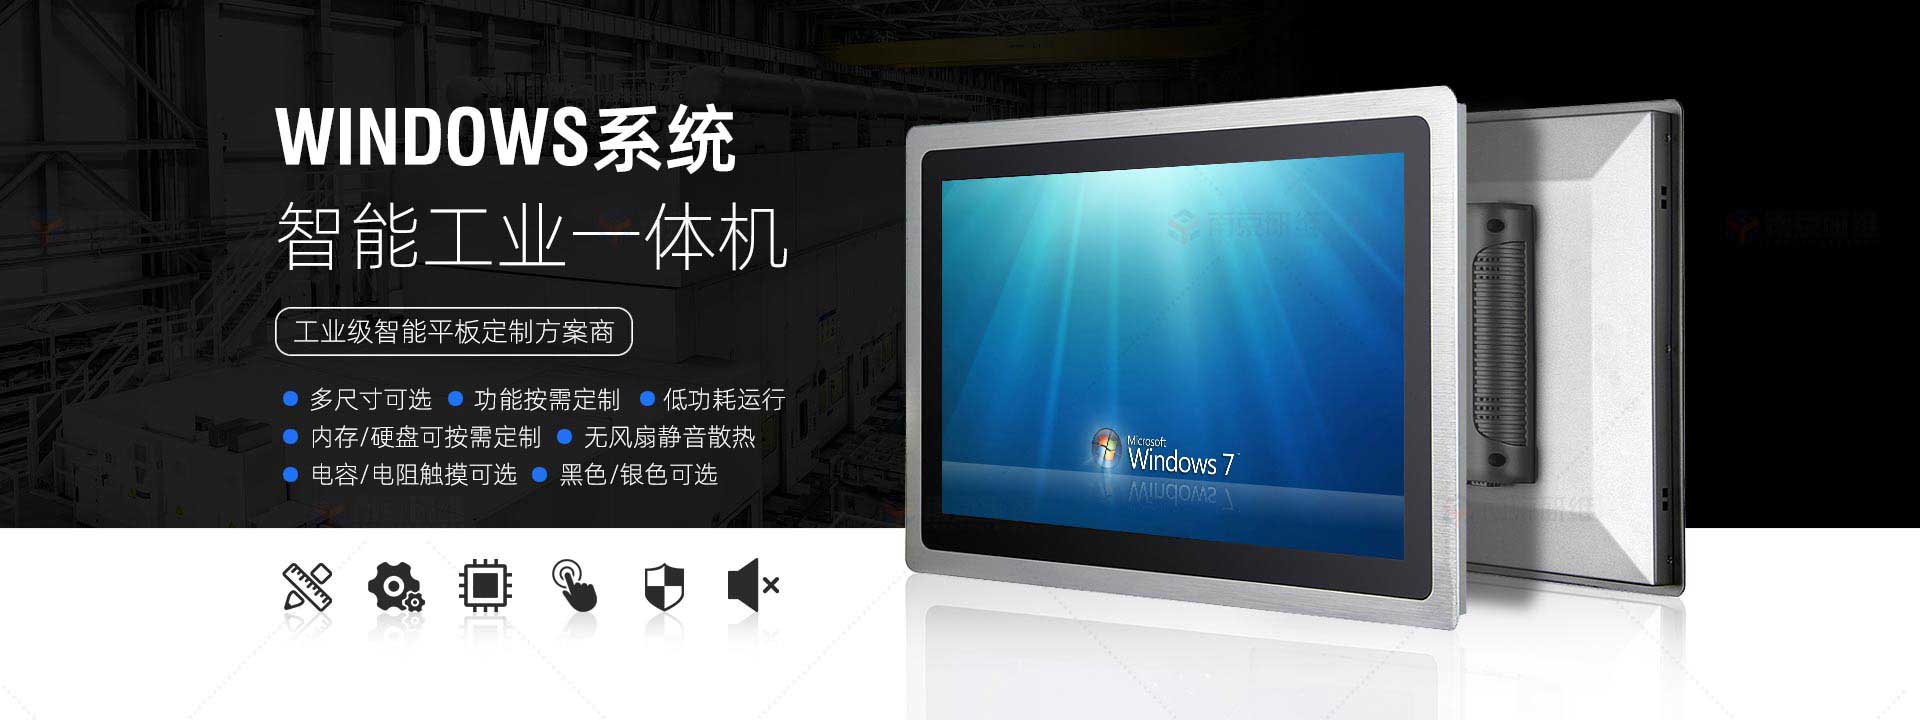 windows系统工业一体机平板电脑